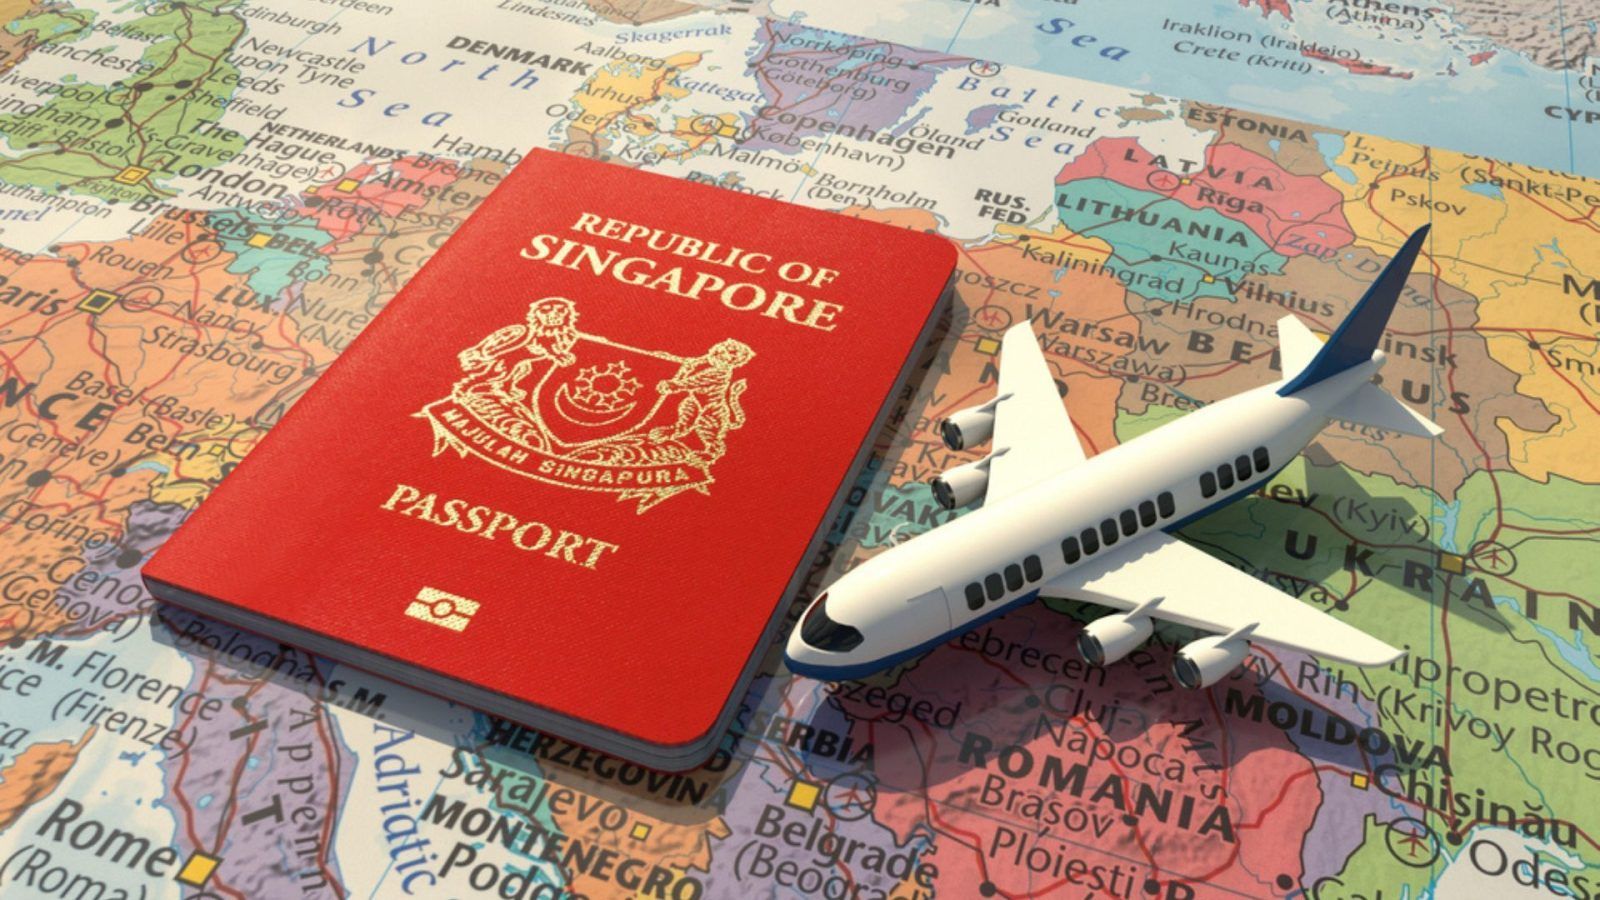 Henley Passport Index: Singapore Tops List, Thailand At 64th Spot